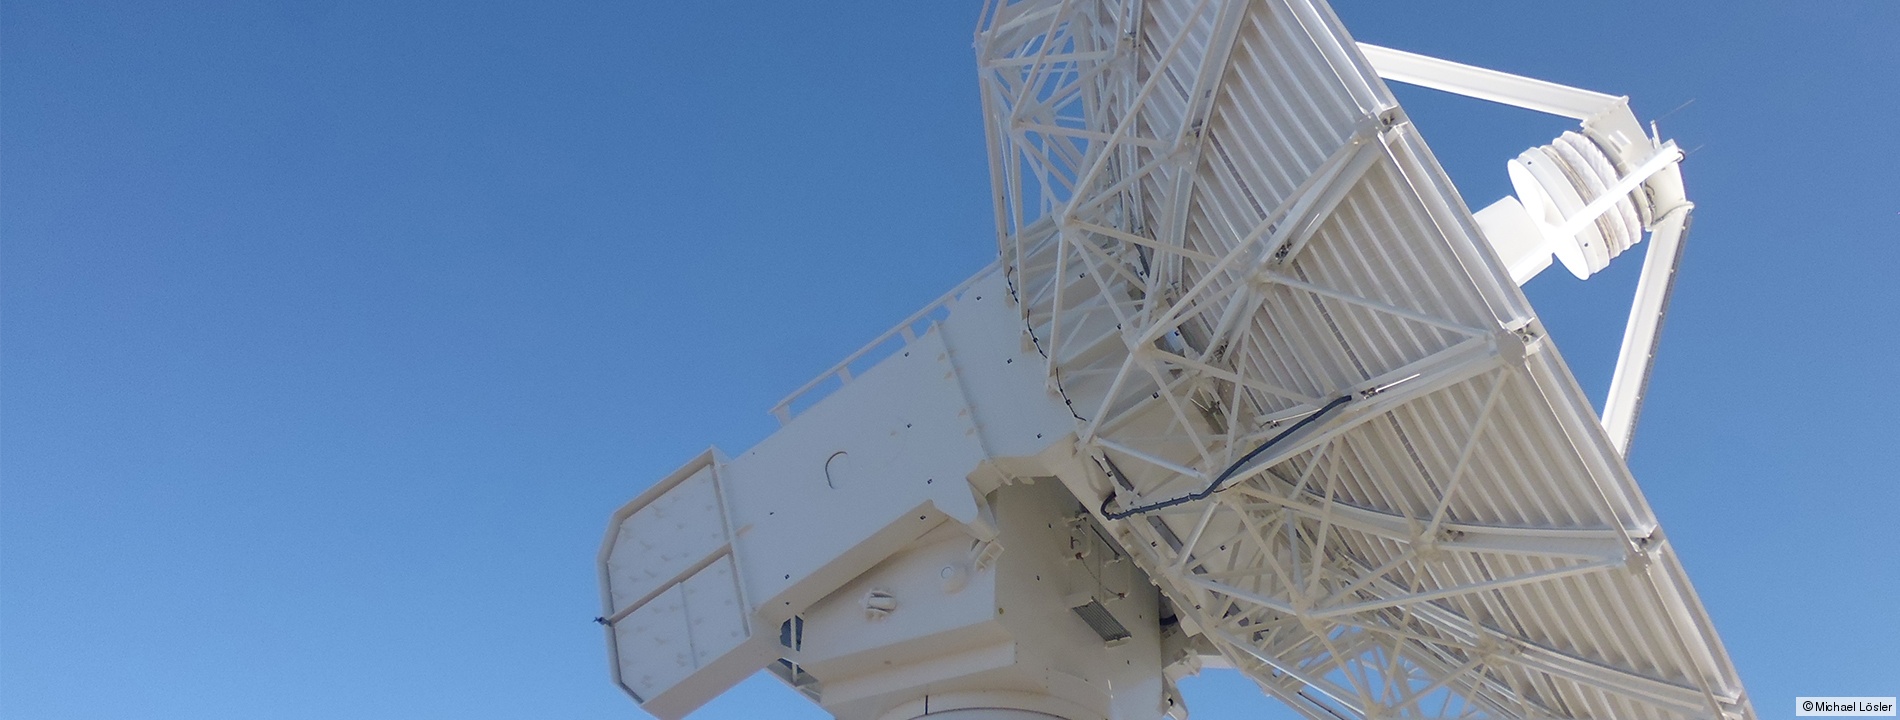 Main Reflector of VGOS-specified VLBI Radio Telescope